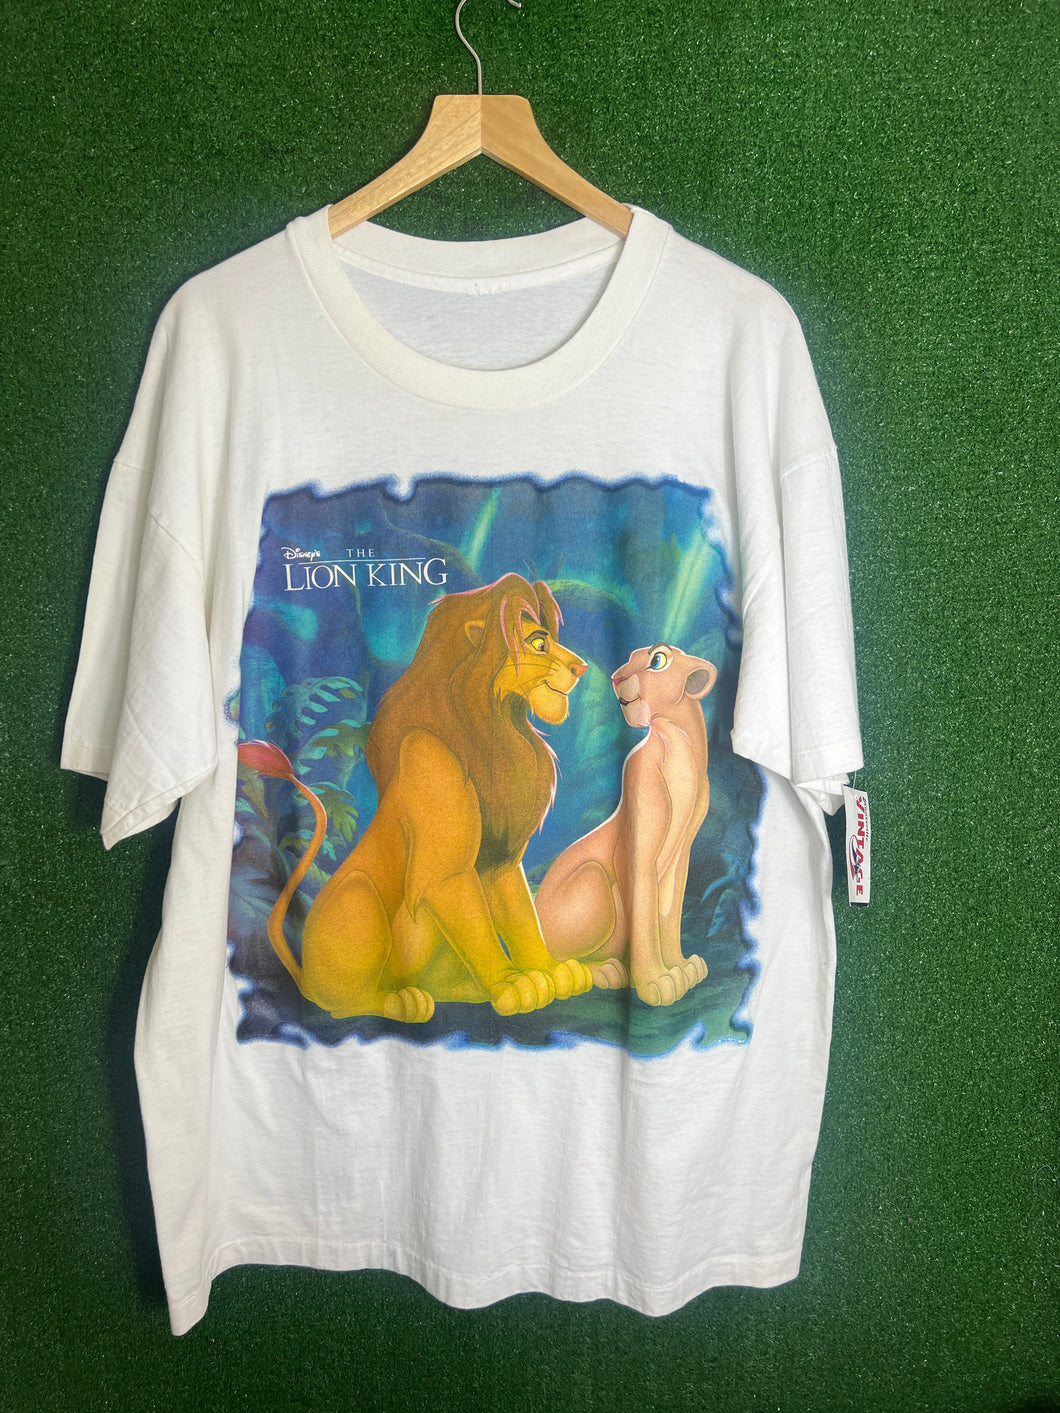 VTG 90s Walt Disney x The Lion King Shirt Size XL / XXL